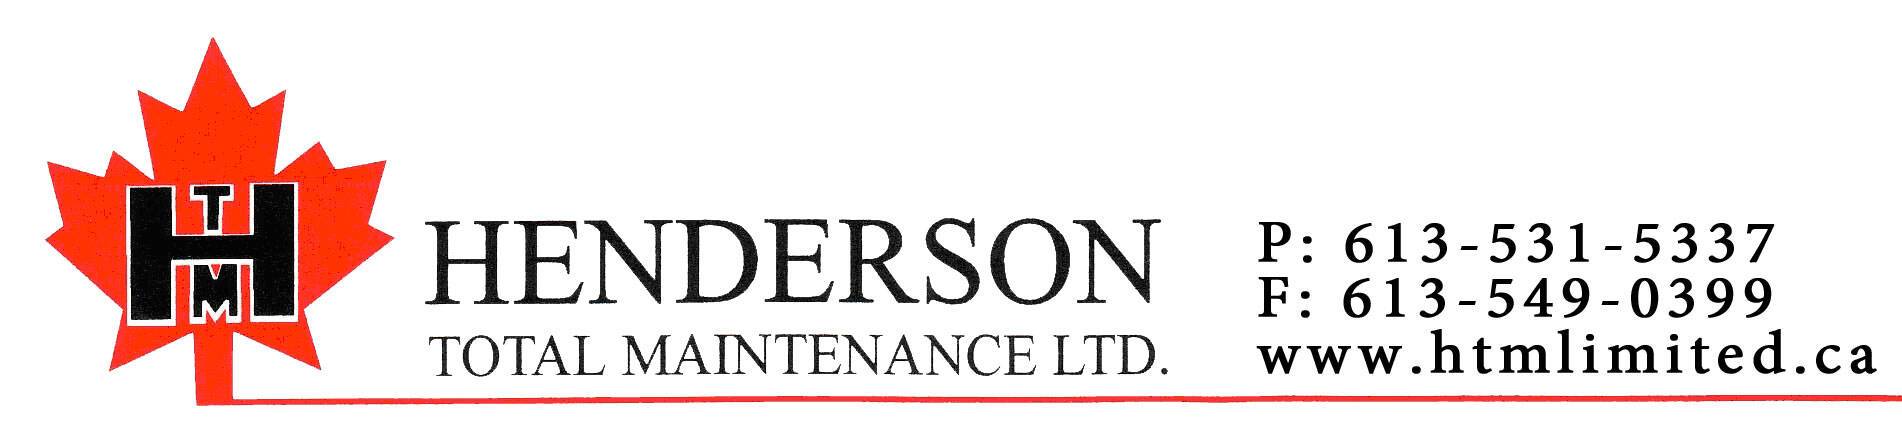 Henderson Total Maintenance Ltd.